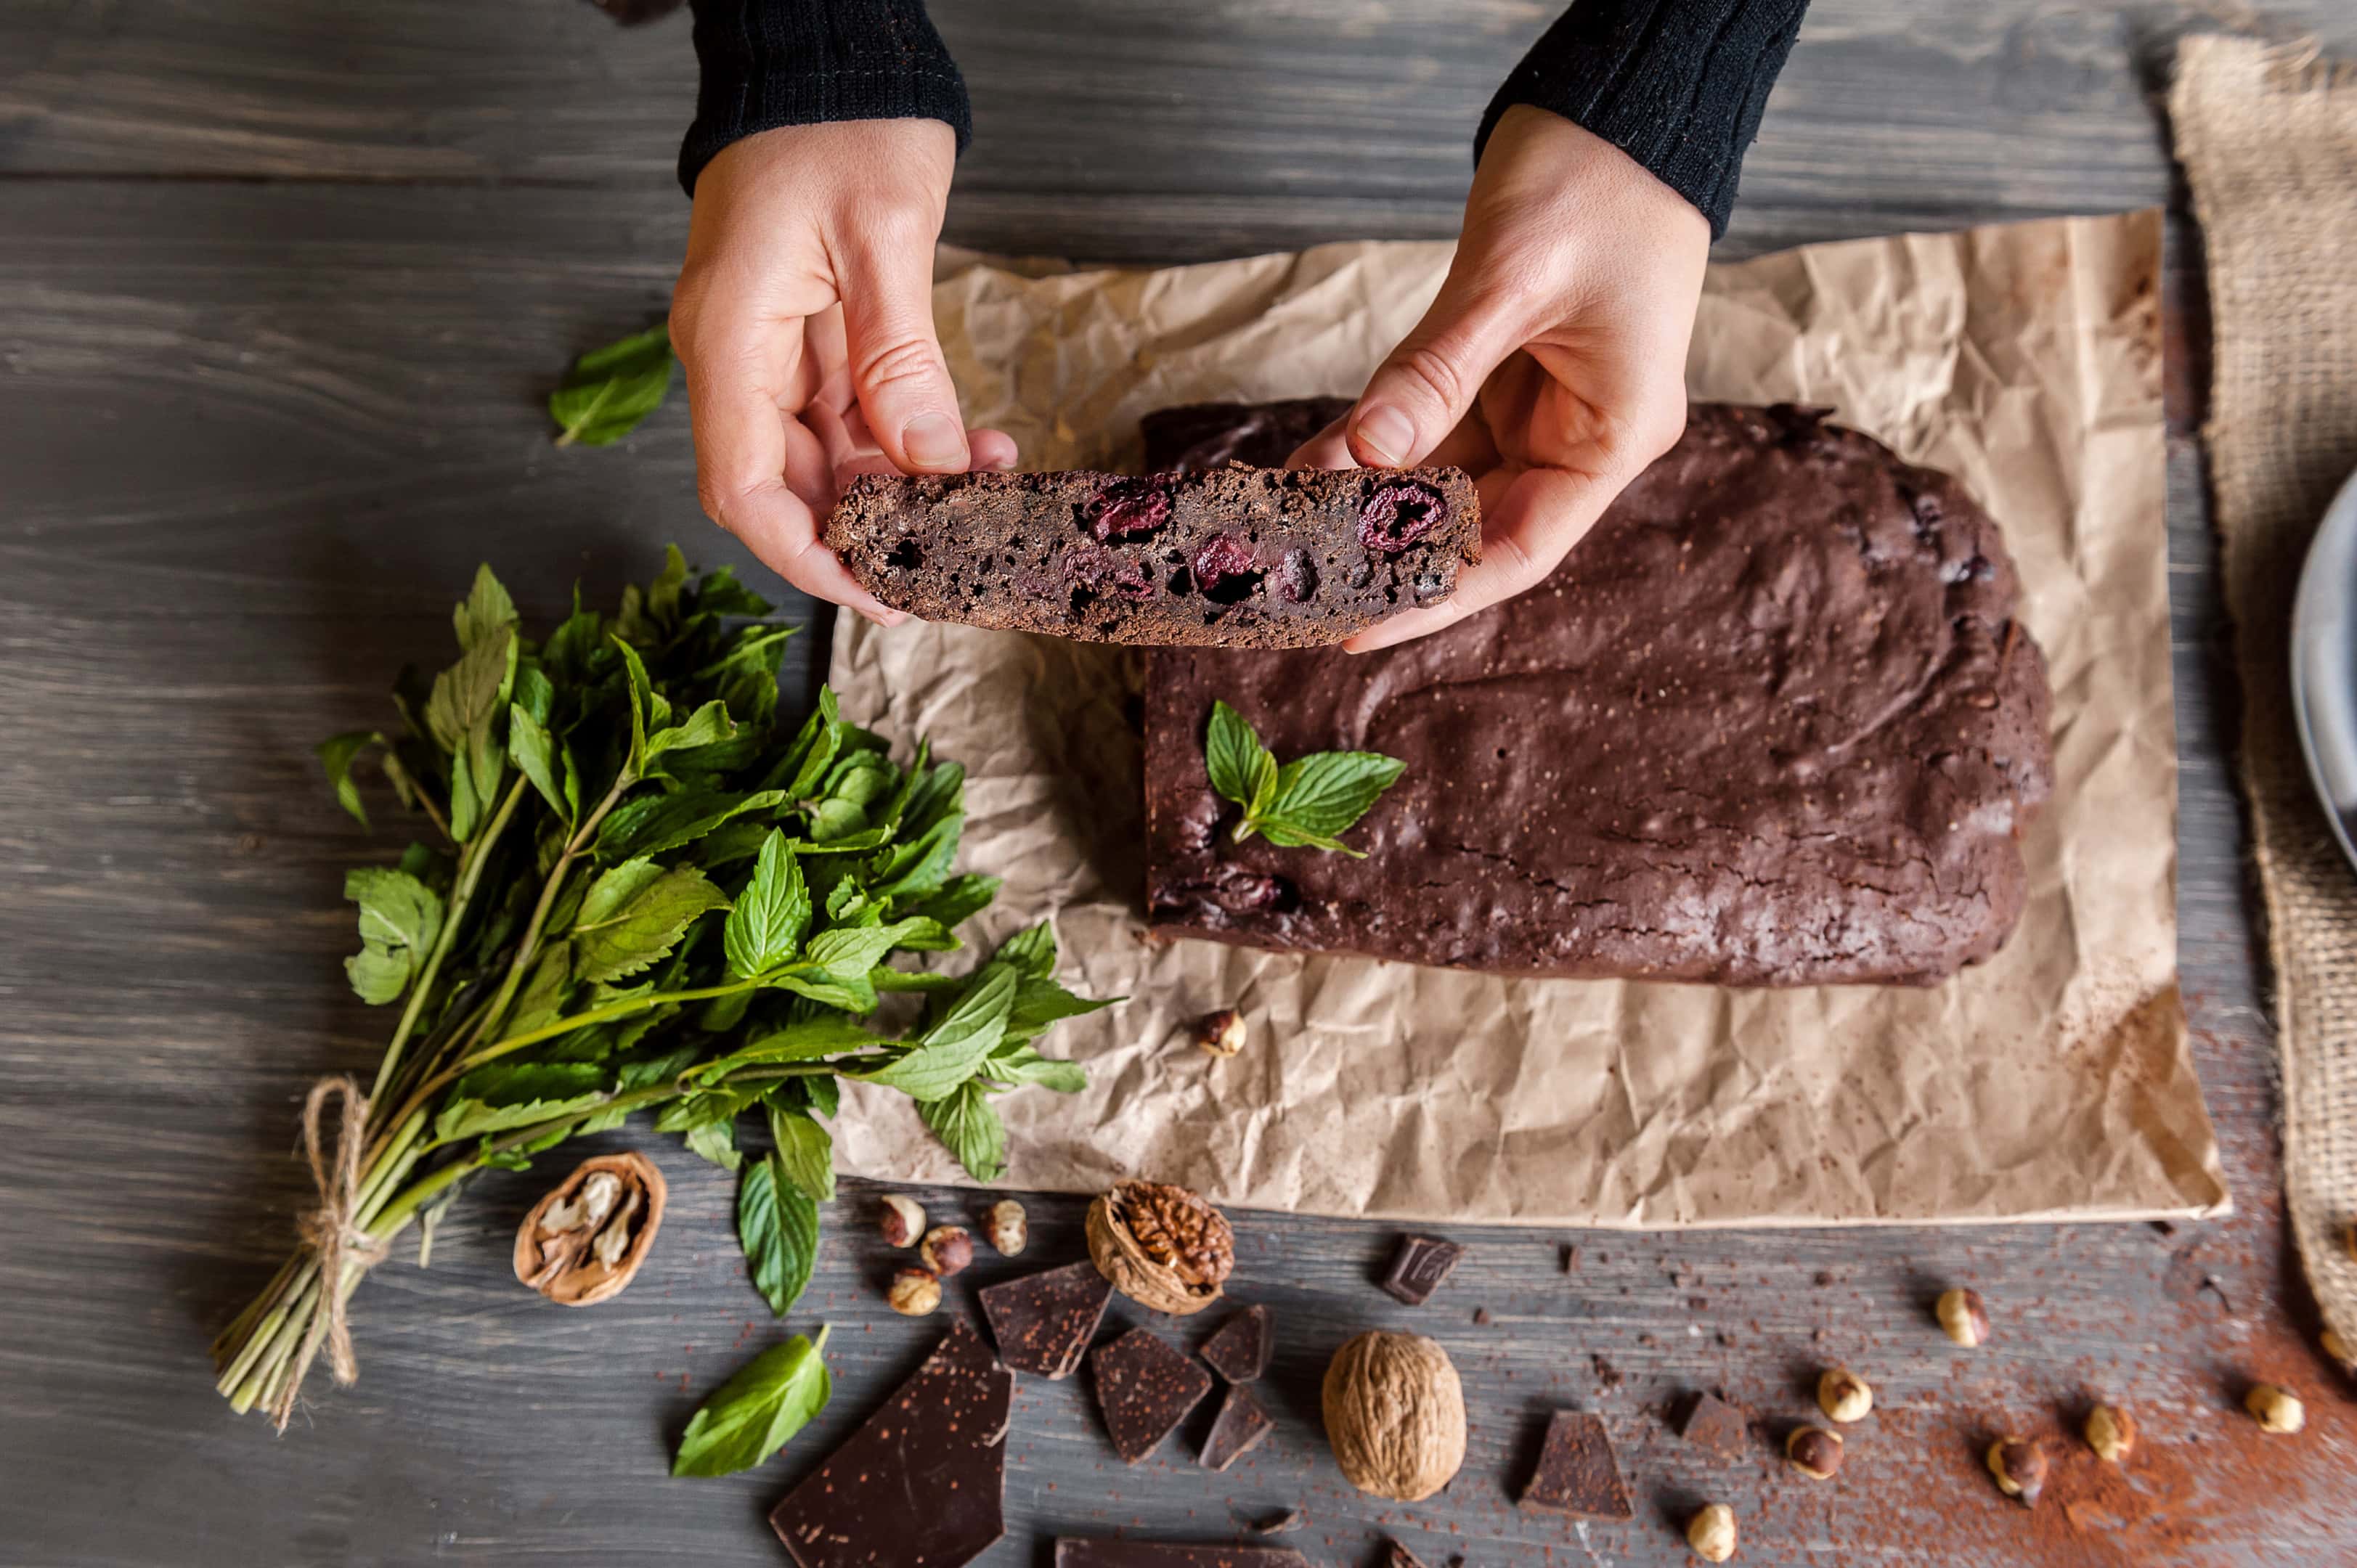 Cutting homemade chocolate chickpea brownie vegan and gluten-free